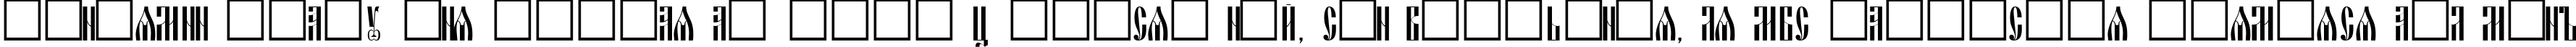 Пример написания шрифтом Slavjanic текста на испанском